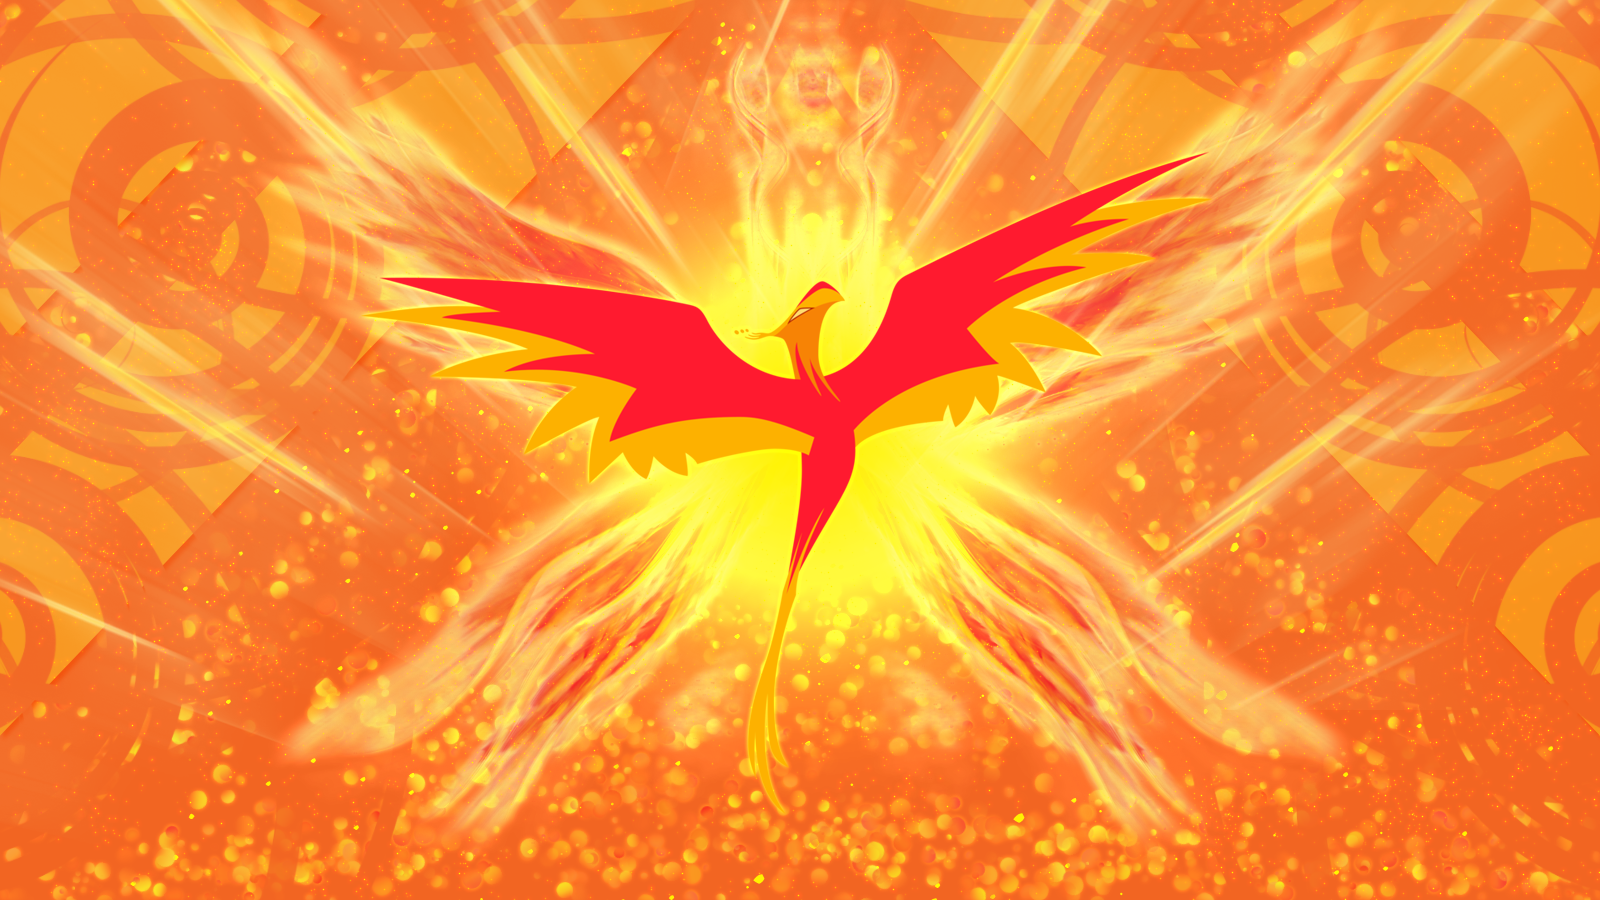 Spirit of Fire by AtomicGreymon and Tarkoll